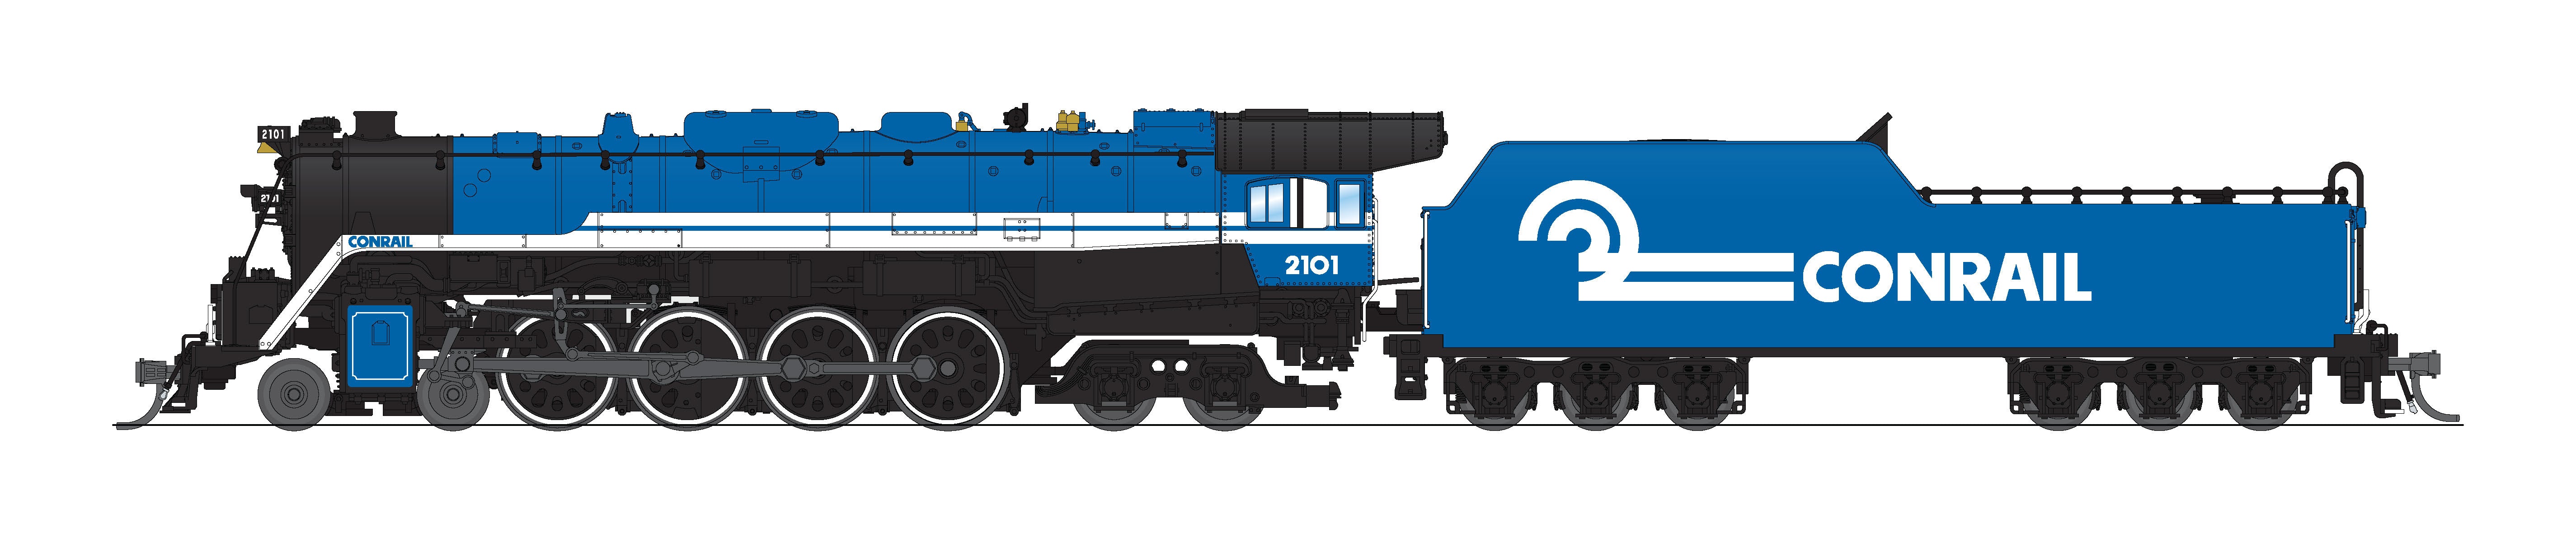 7412 Reading T1 4-8-4, Conrail Steam Special #2101, Paragon4 Sound/DC/DCC, Smoke, N (Fantasy Paint Scheme)